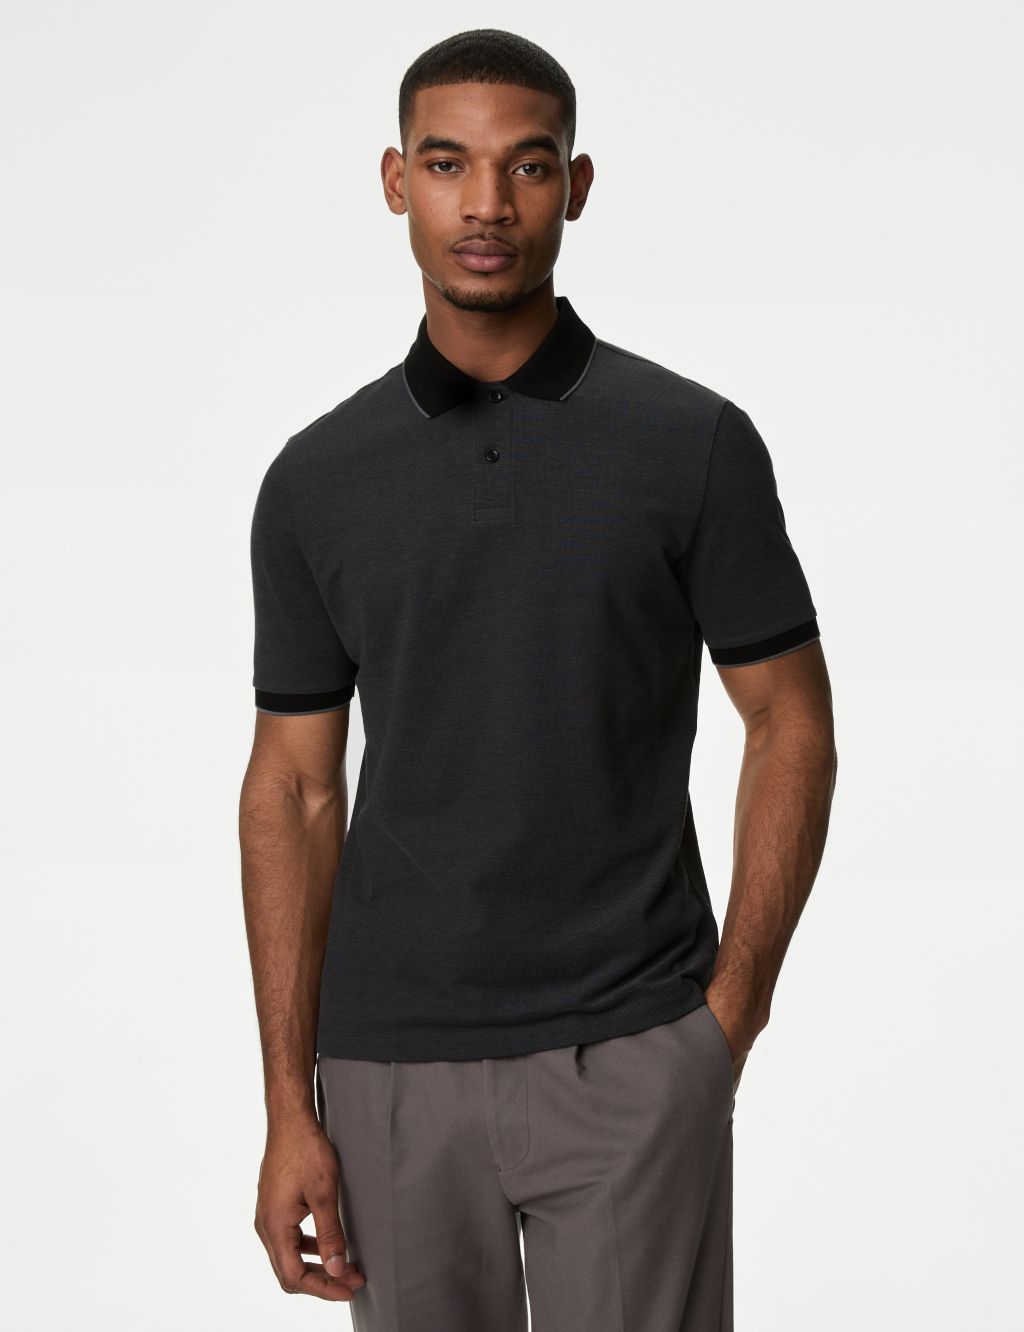 Men’s Black Polo Shirts | M&S